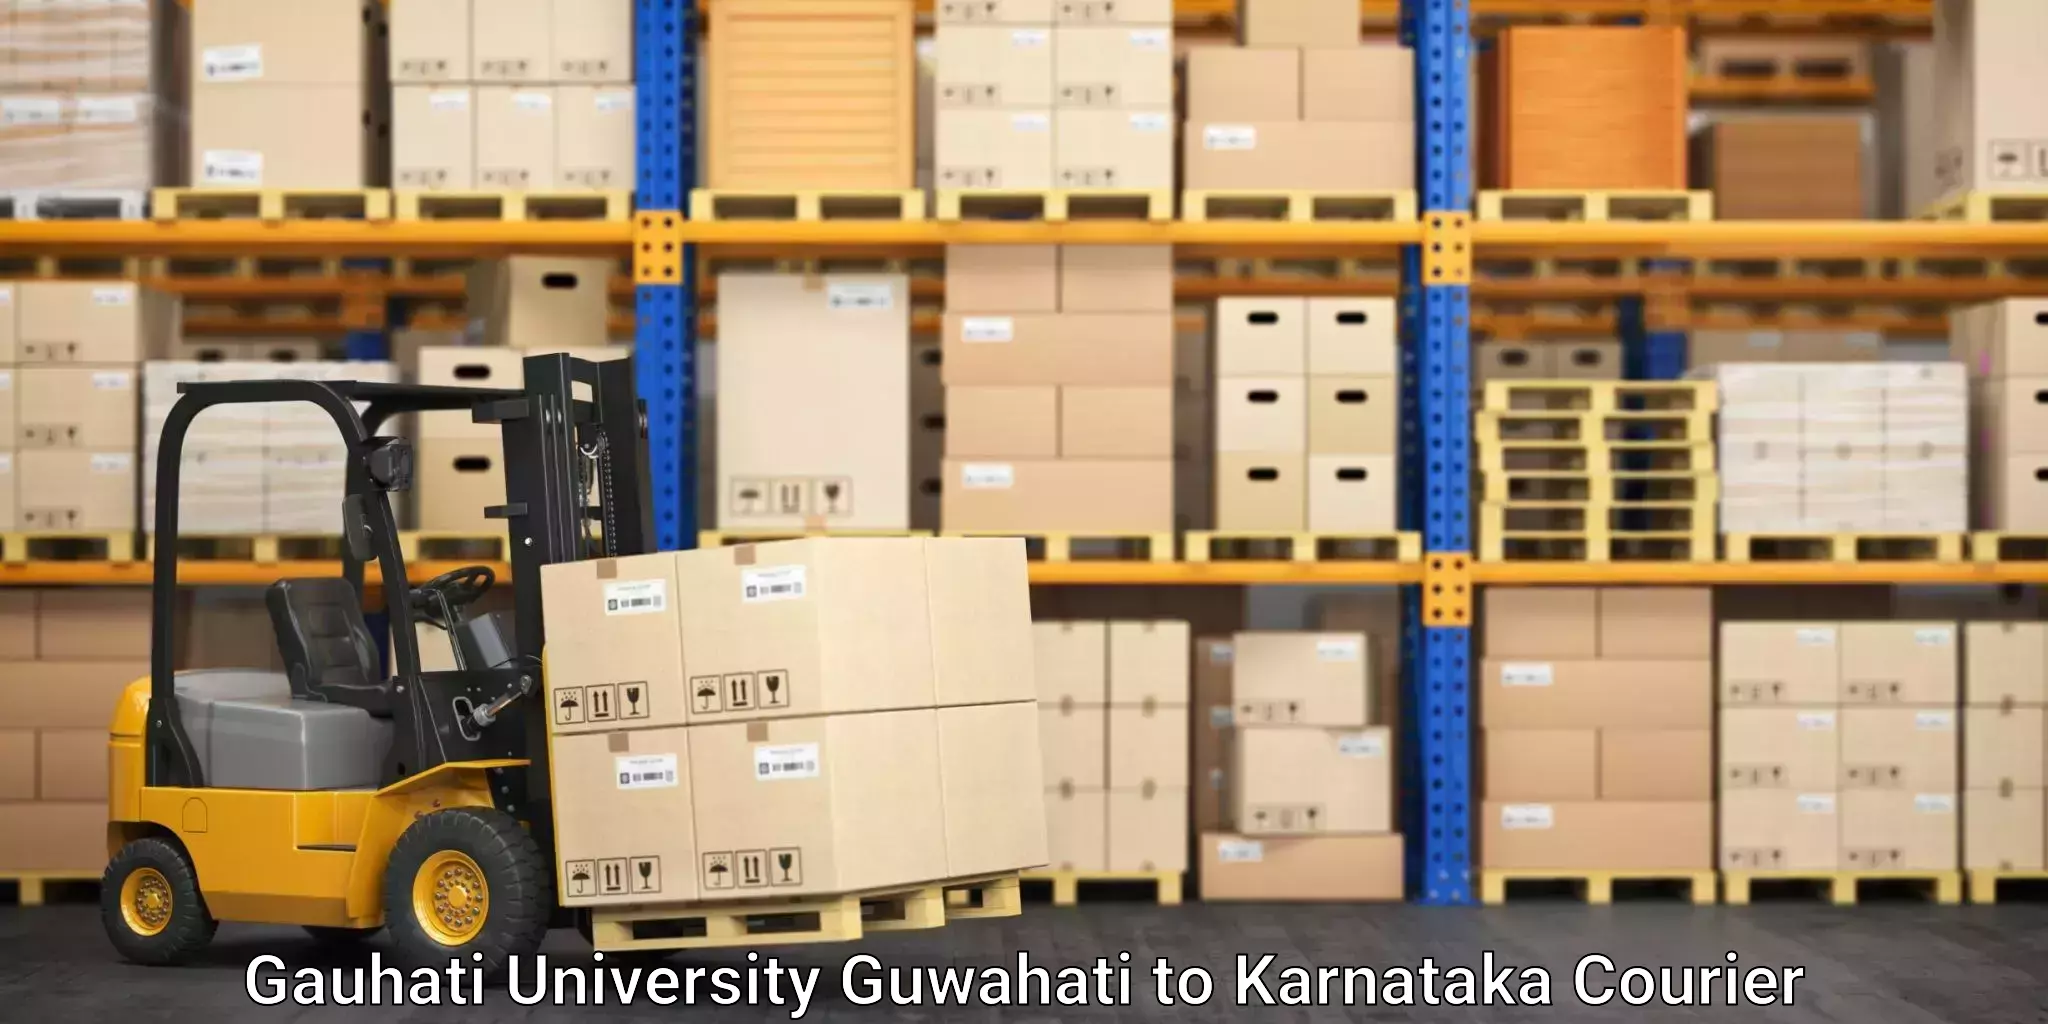 Professional courier handling in Gauhati University Guwahati to Karnataka